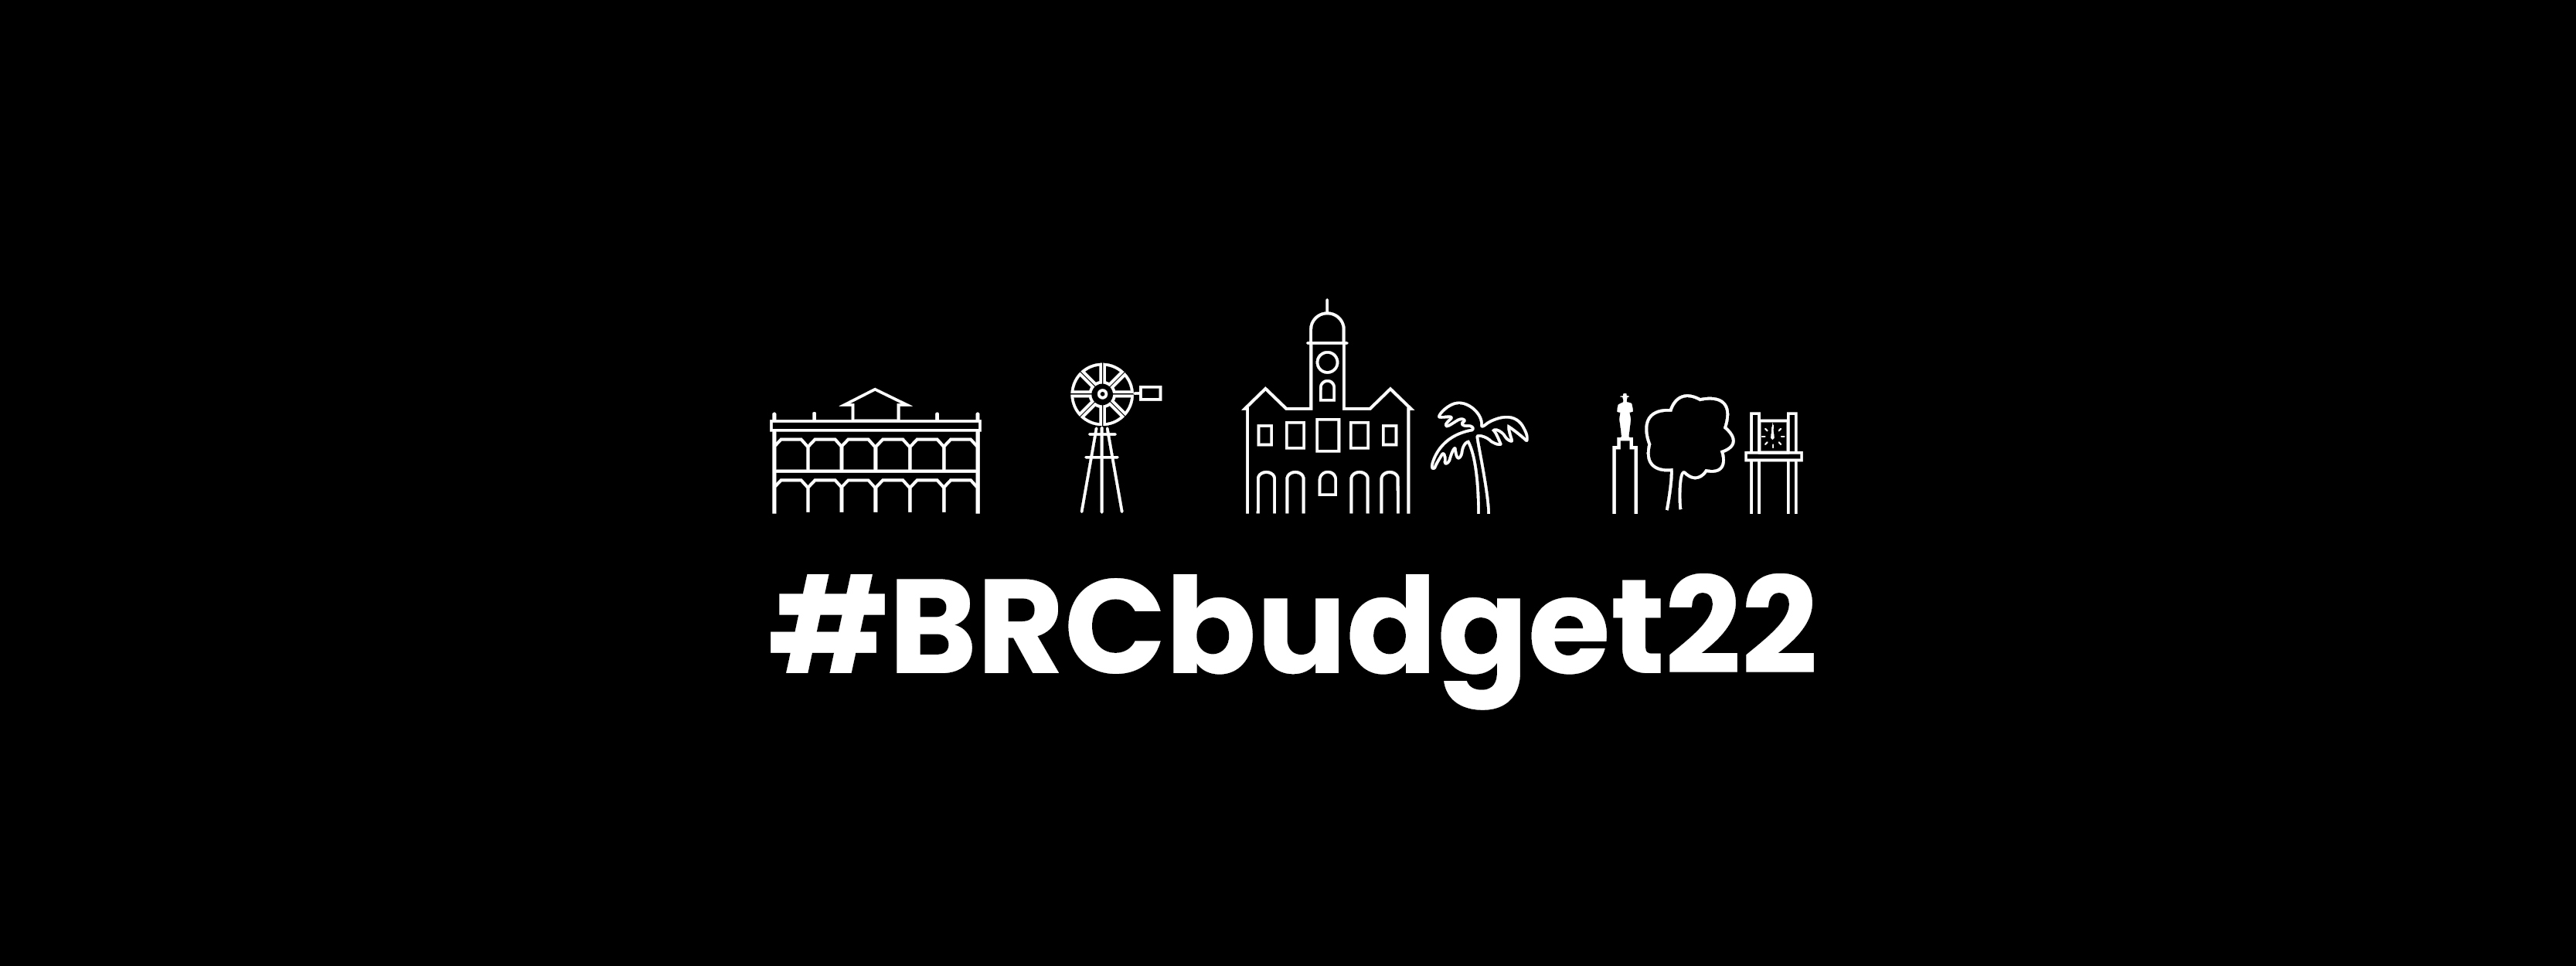 2022 Budget web banner